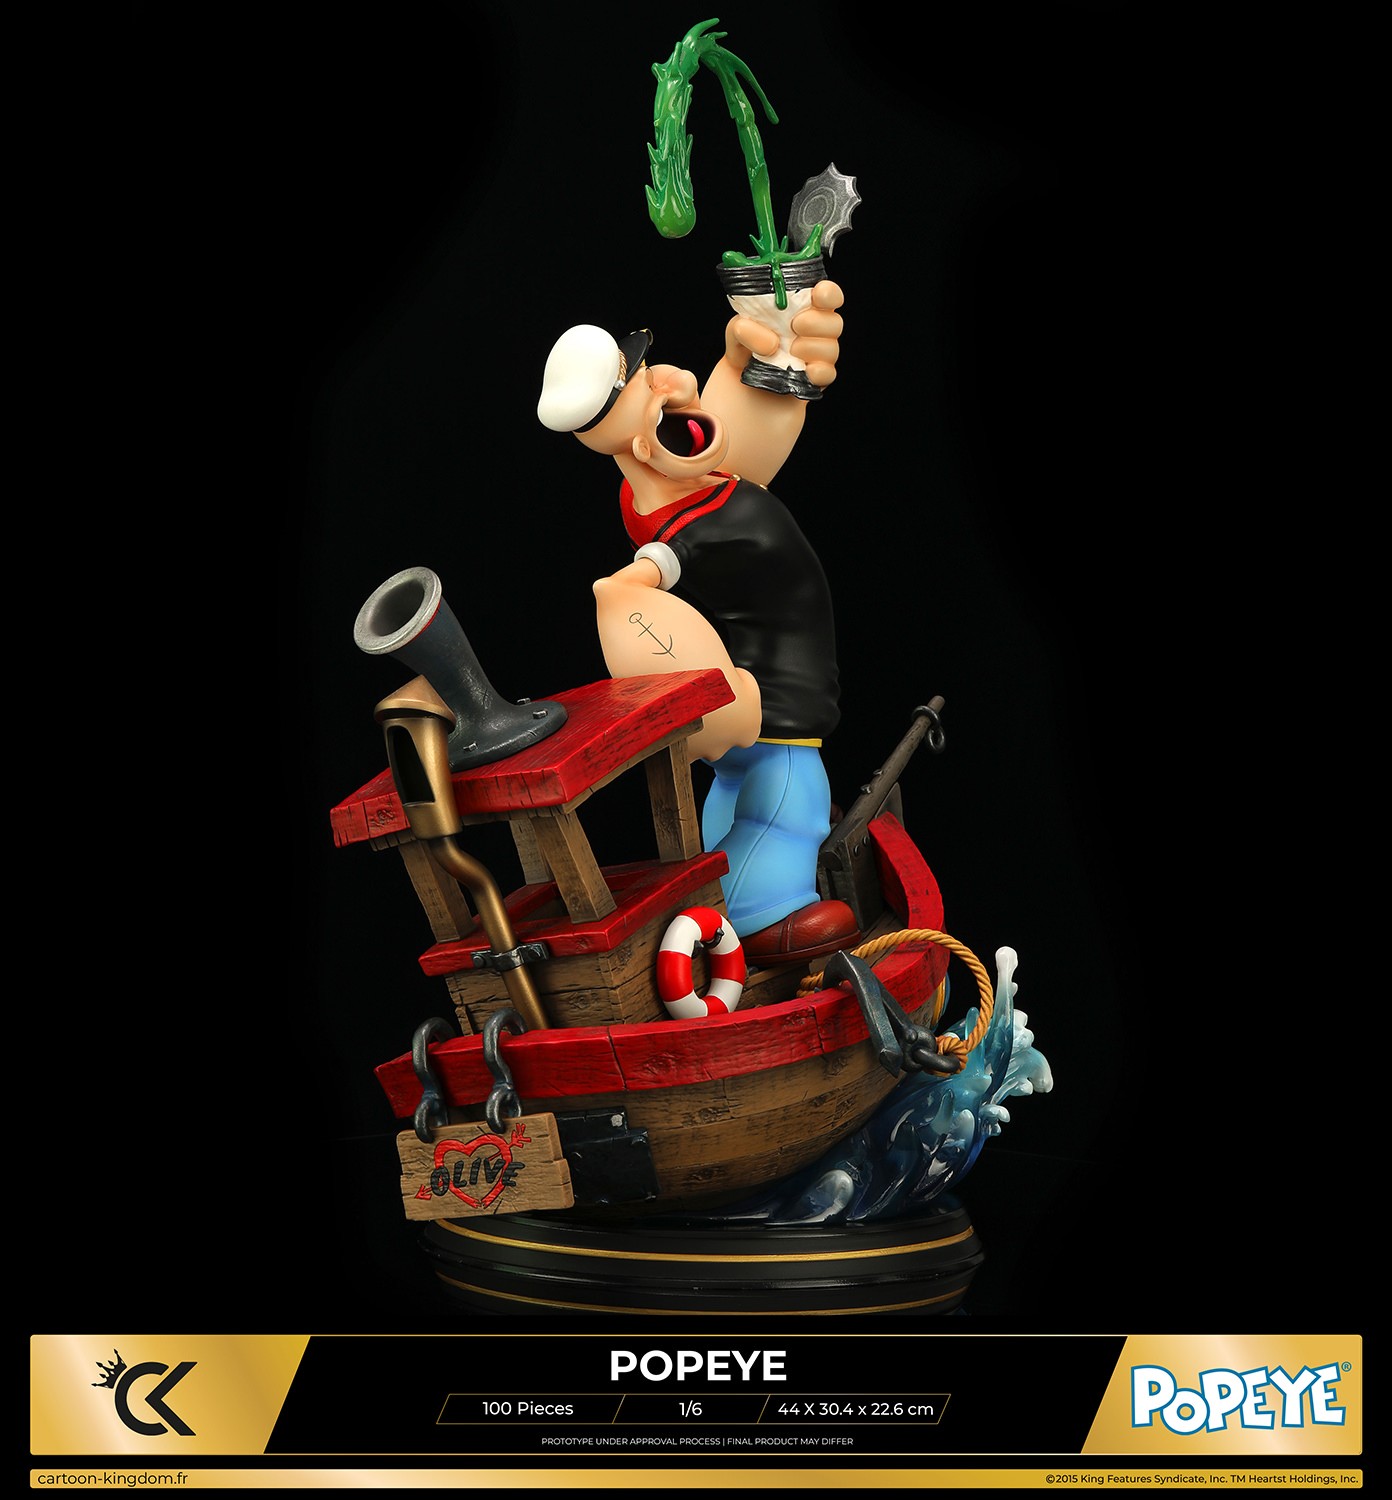 Popeye (Olive Version)